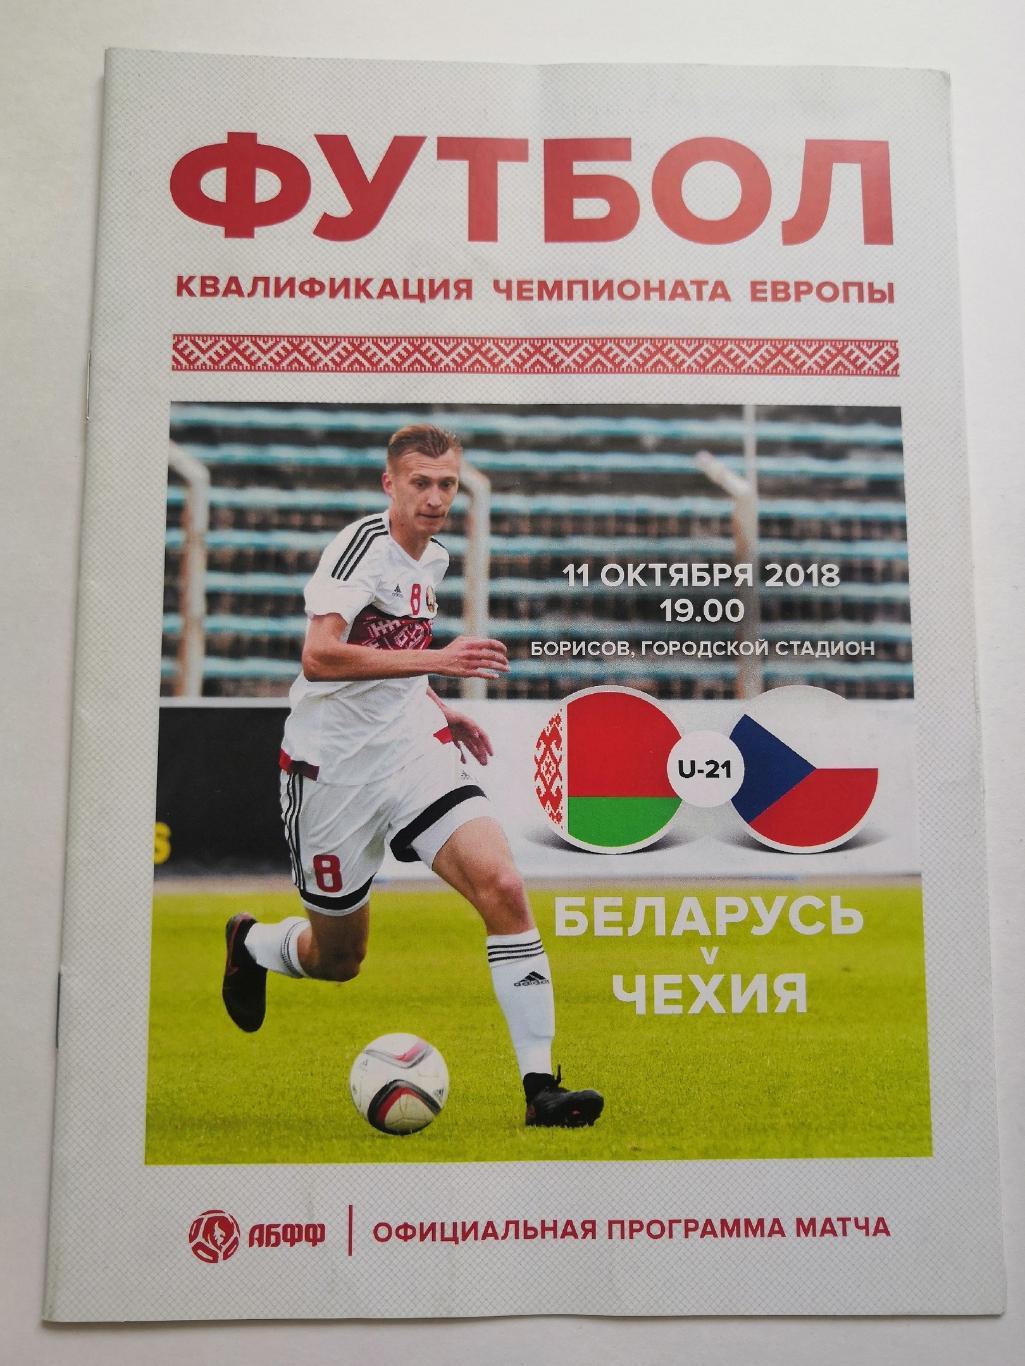 Беларусь - Чехия U-21 - 2018